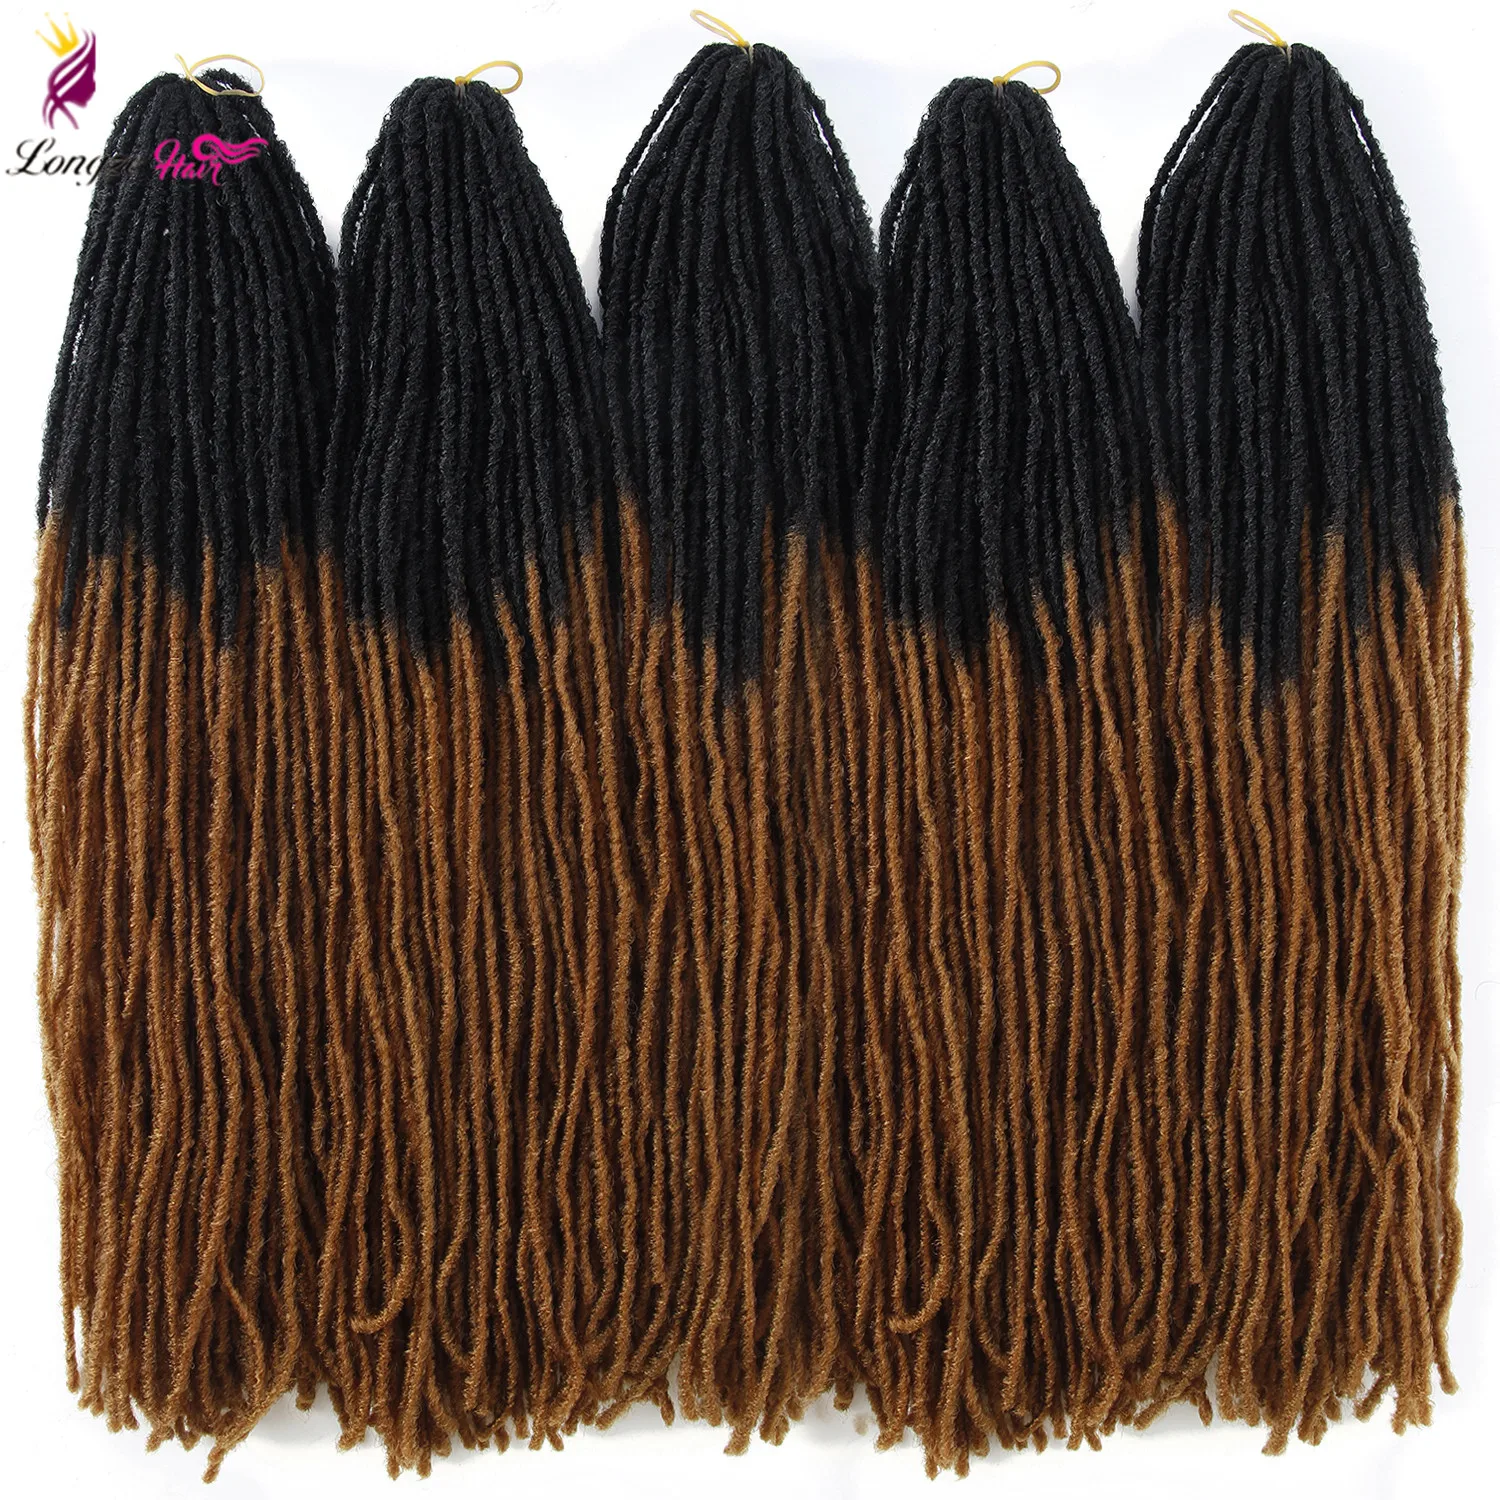 

18inch Goddess Locs Crochet Braids Crochet Hair Extensions Faux Locs Straight Synthetic Braiding Hair dread styles, #1,#1b,#2,black,#27,#8,#10,bug,#350,#144